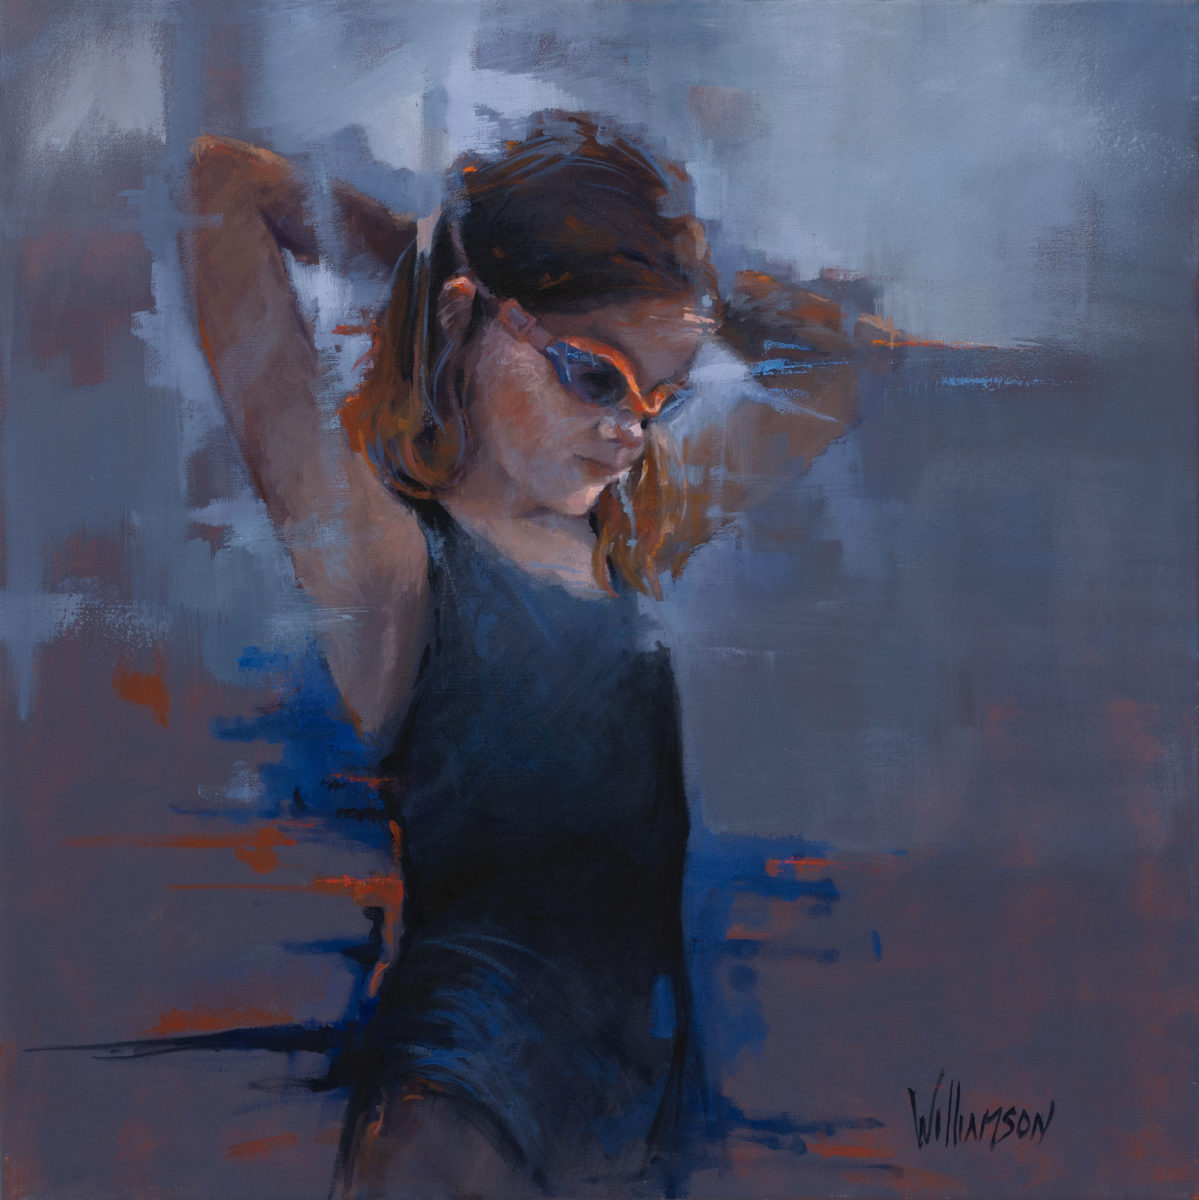 Girl with Orange Goggles | Jan Williamson | Oil on canvas | 61 x 61 cm | $6,500